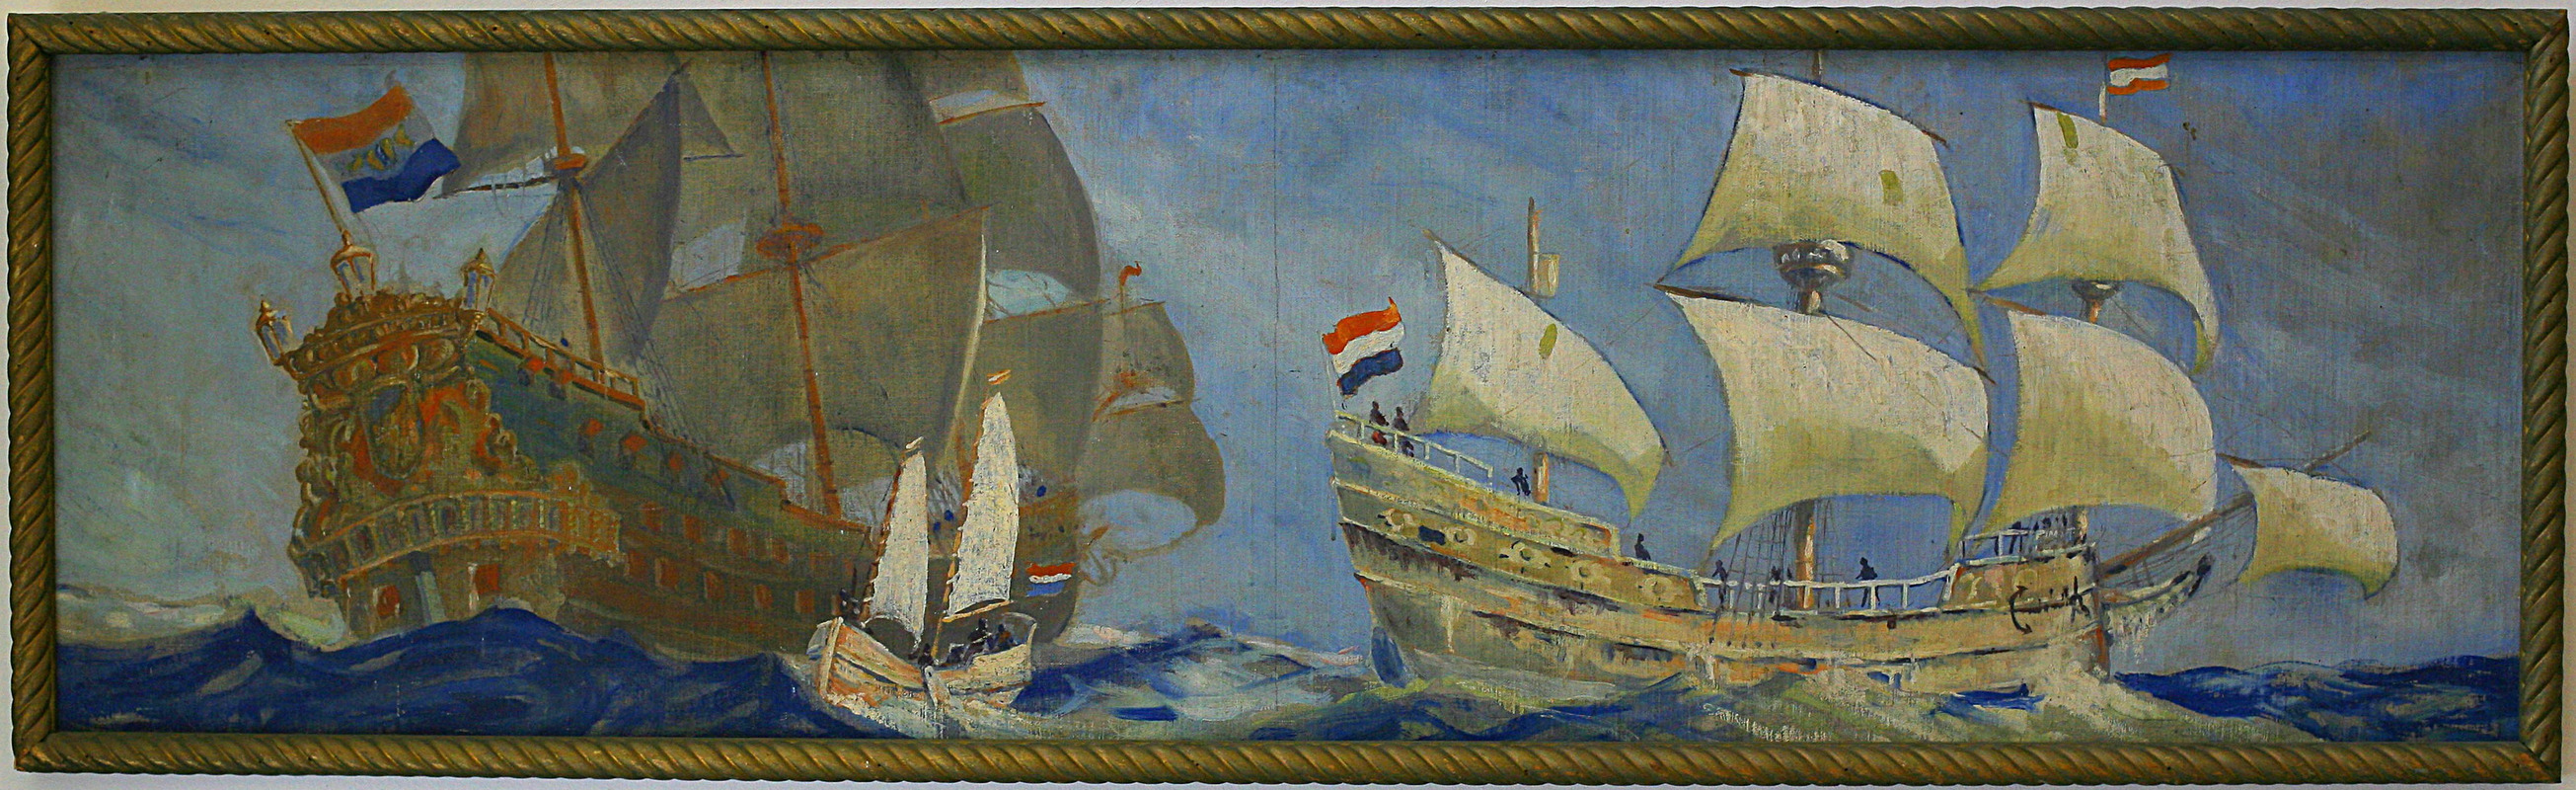 Ships Through the Ages: The Old "Hollandia," Schooner, Hendrik Hudson's "Half Moon"